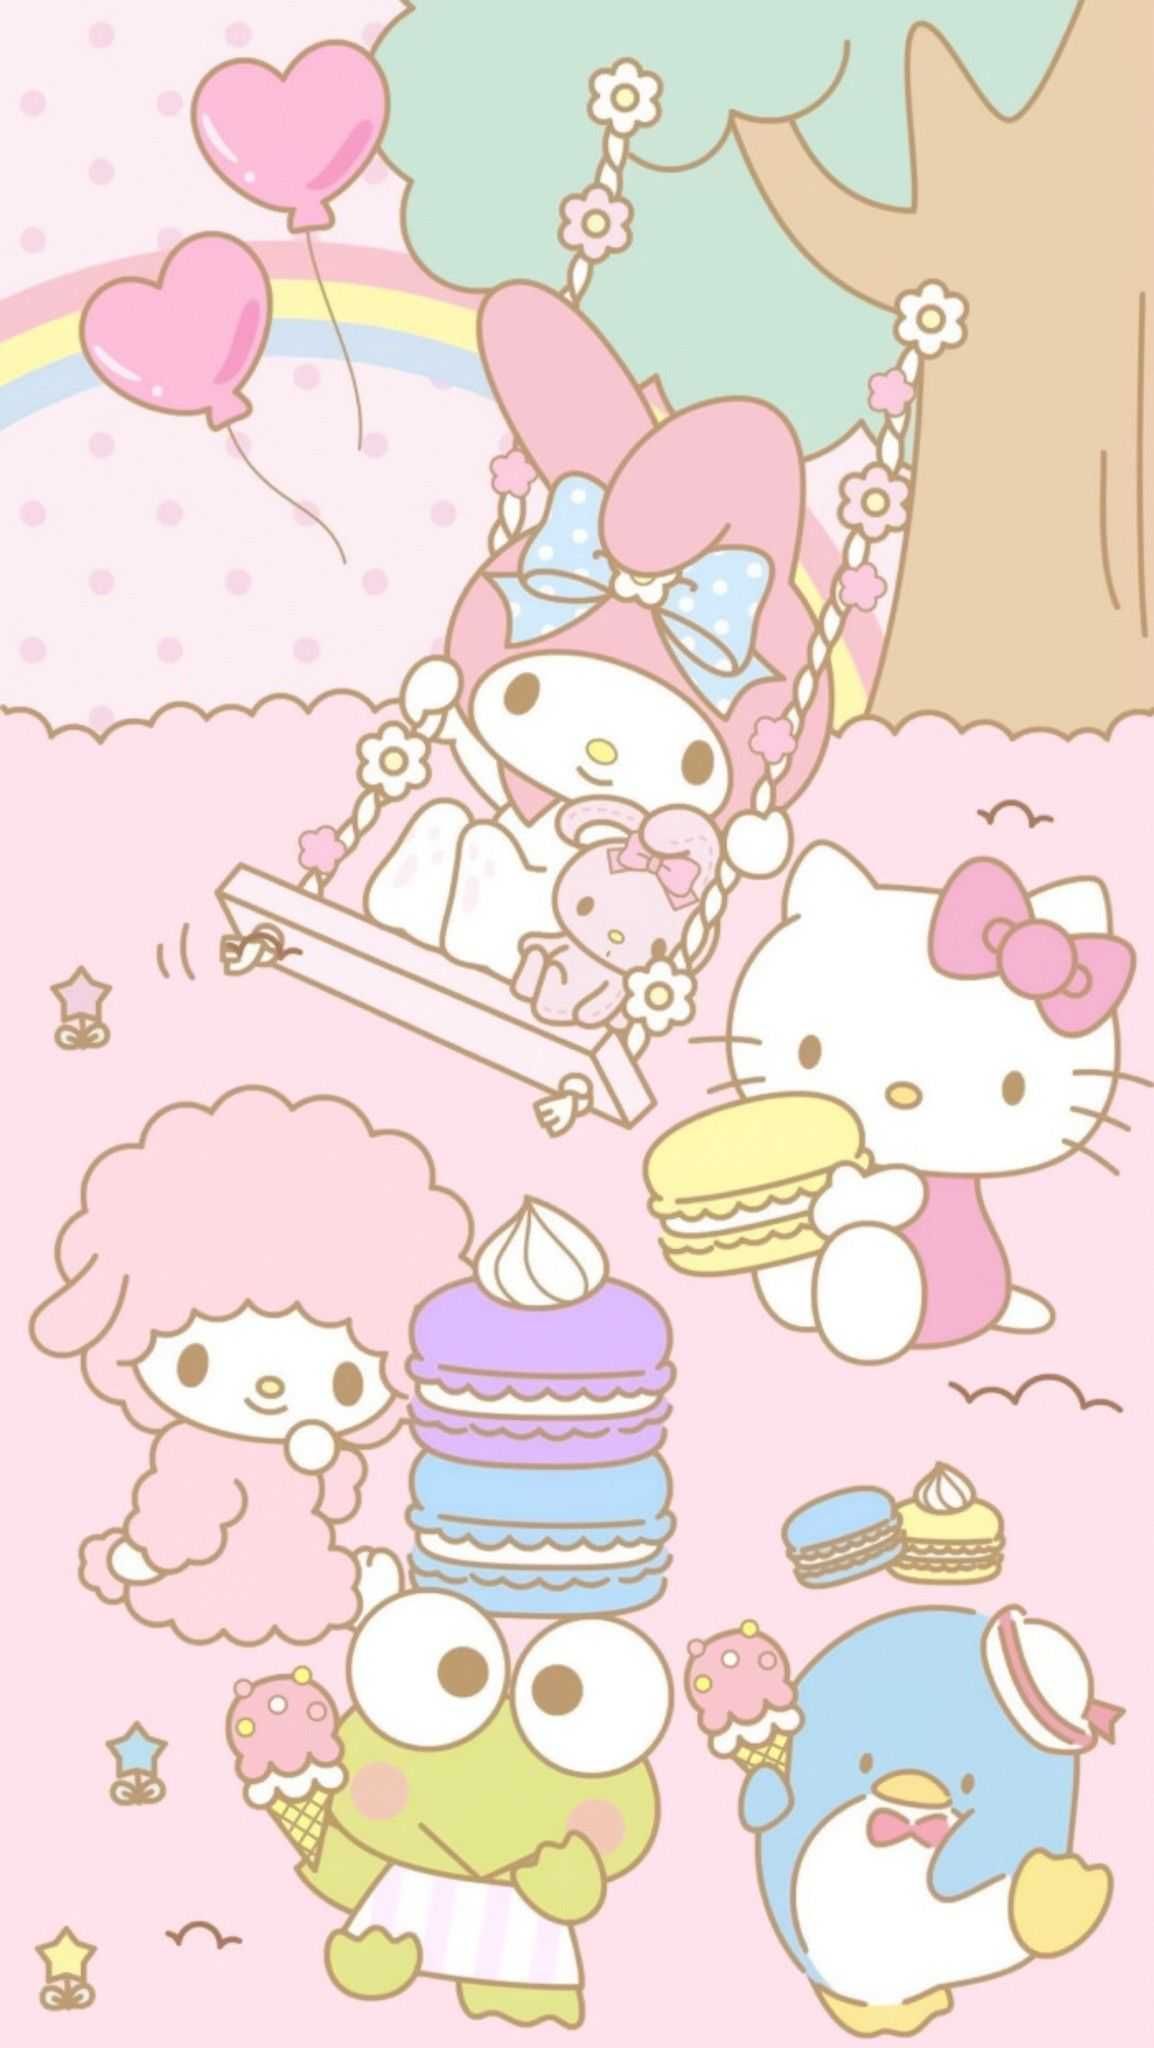 Sanrio Wallpaper. Walpaper hello kitty, Hello kitty background, Hello kitty image